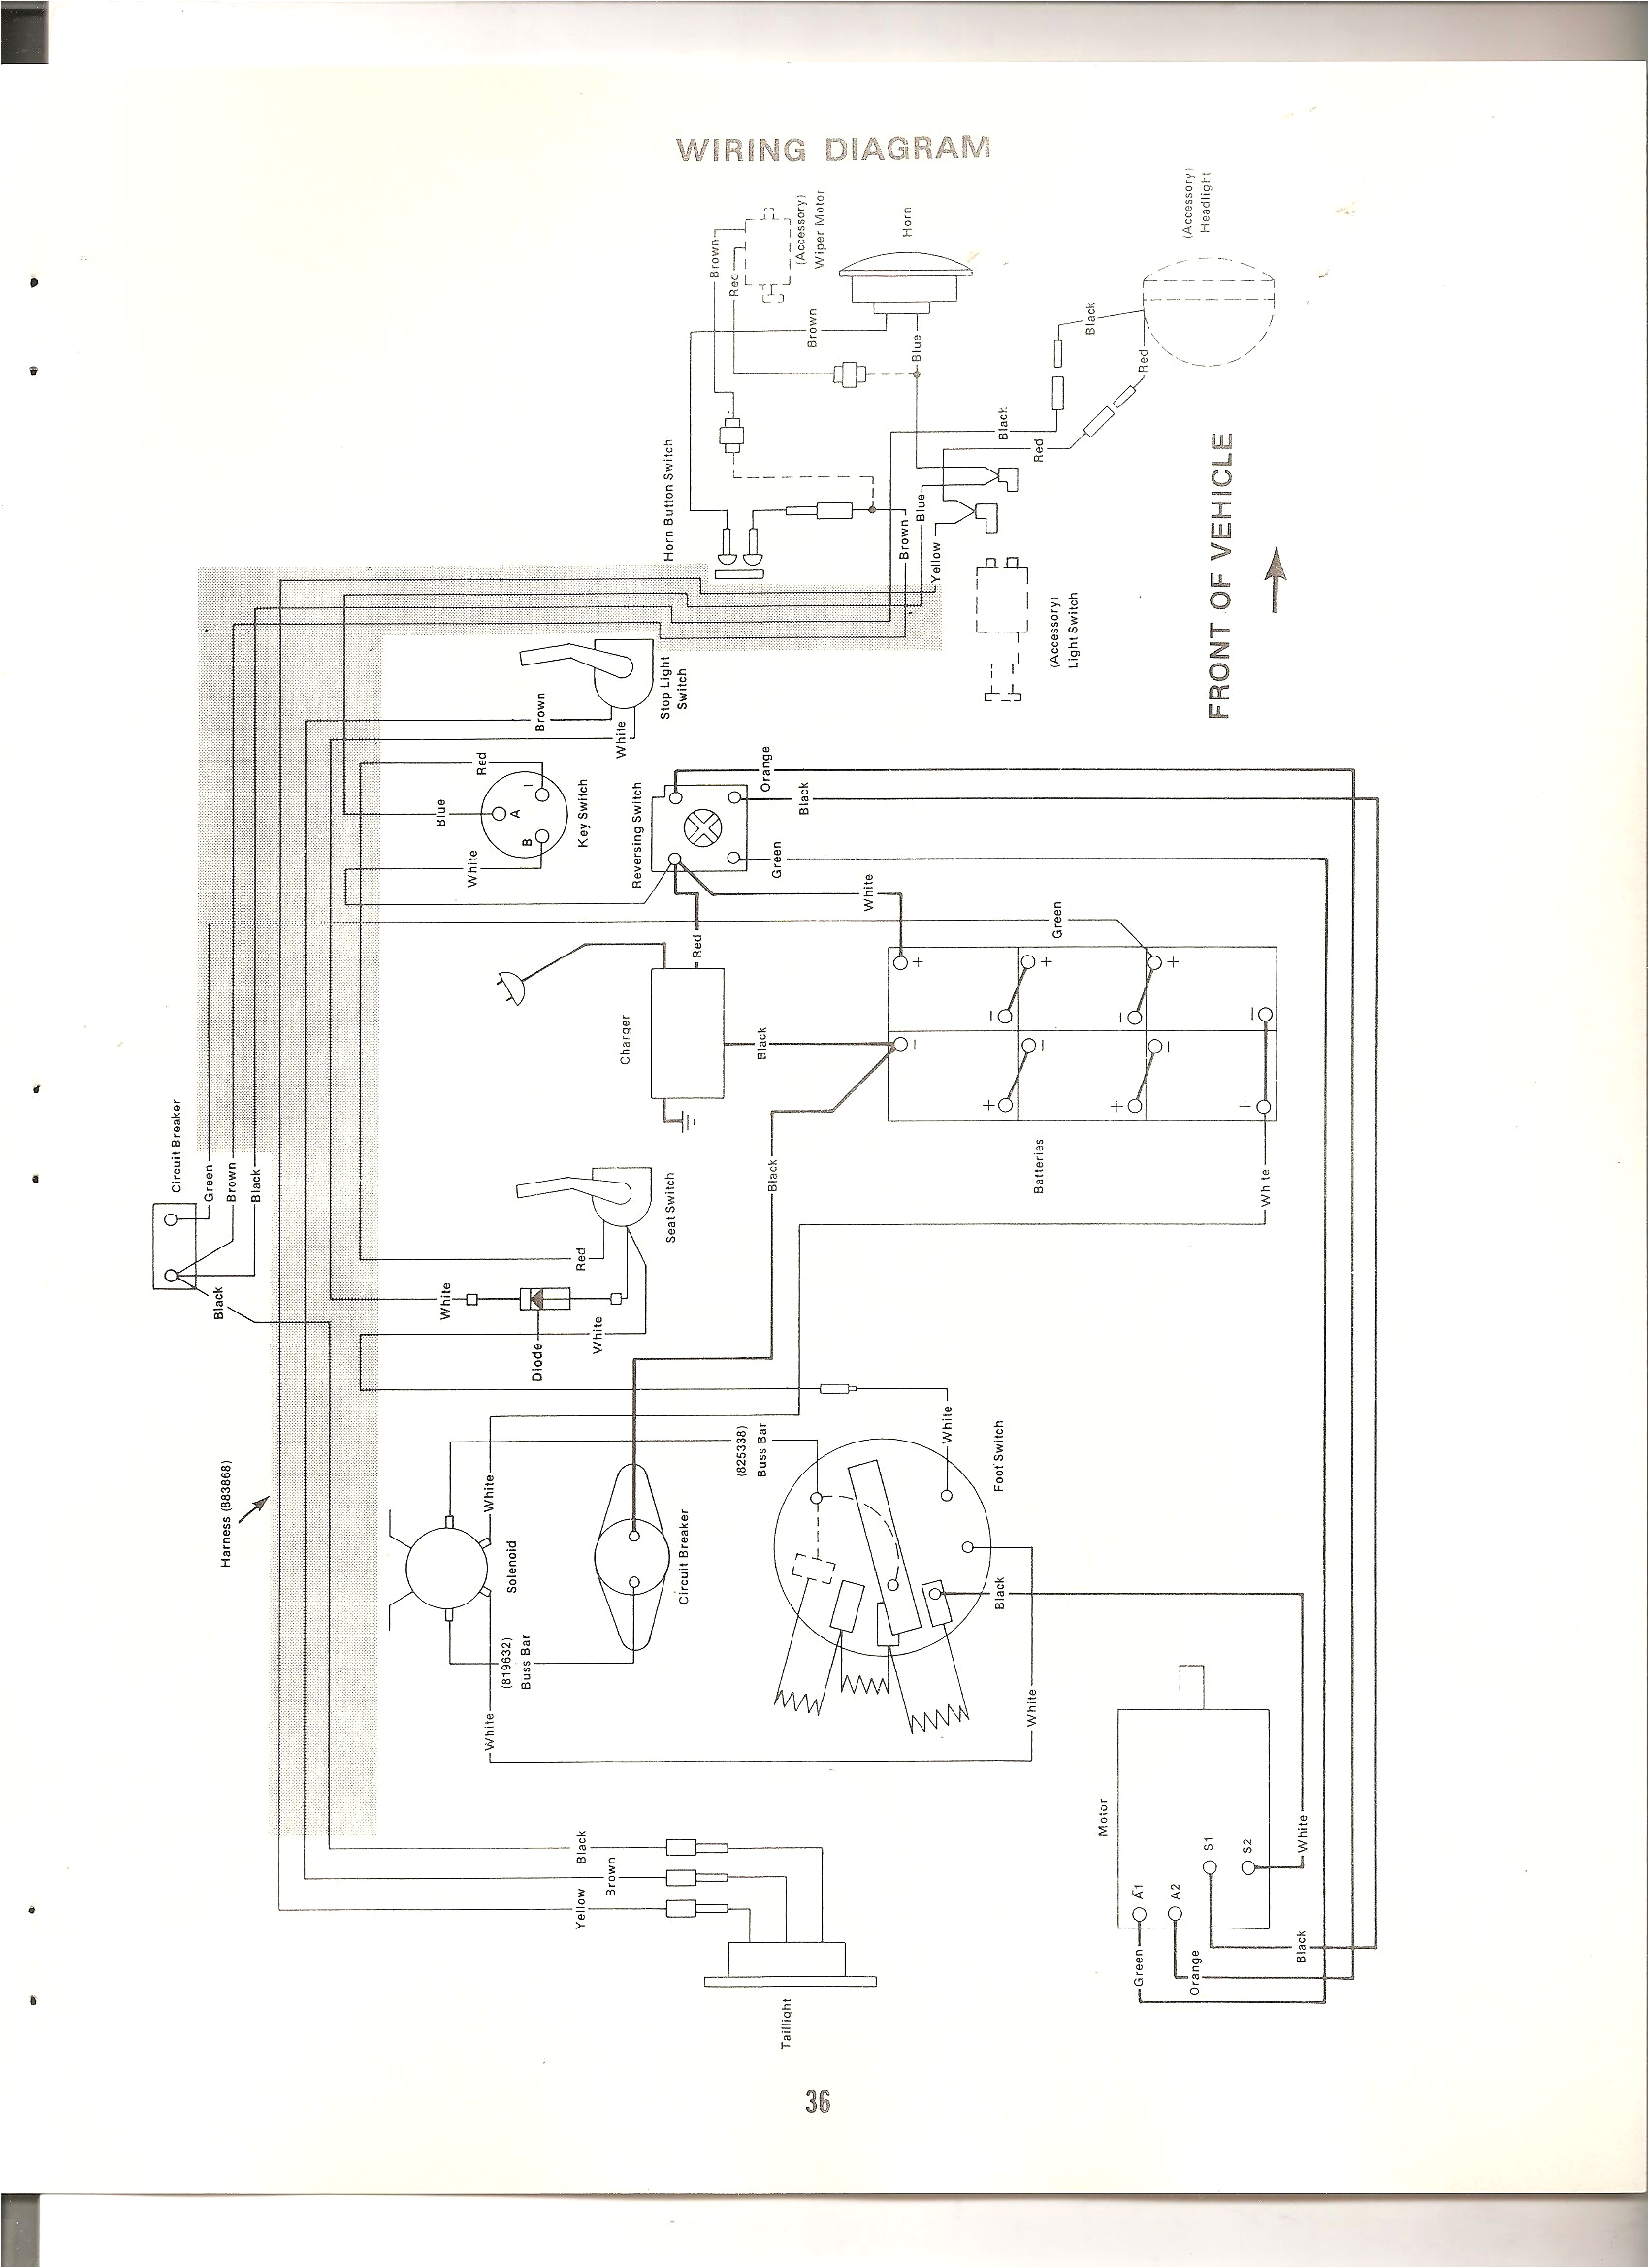 cushman wiring diagram meter maids wiring diagram host cushman truckster wiring diagram wiring diagram completed cushman